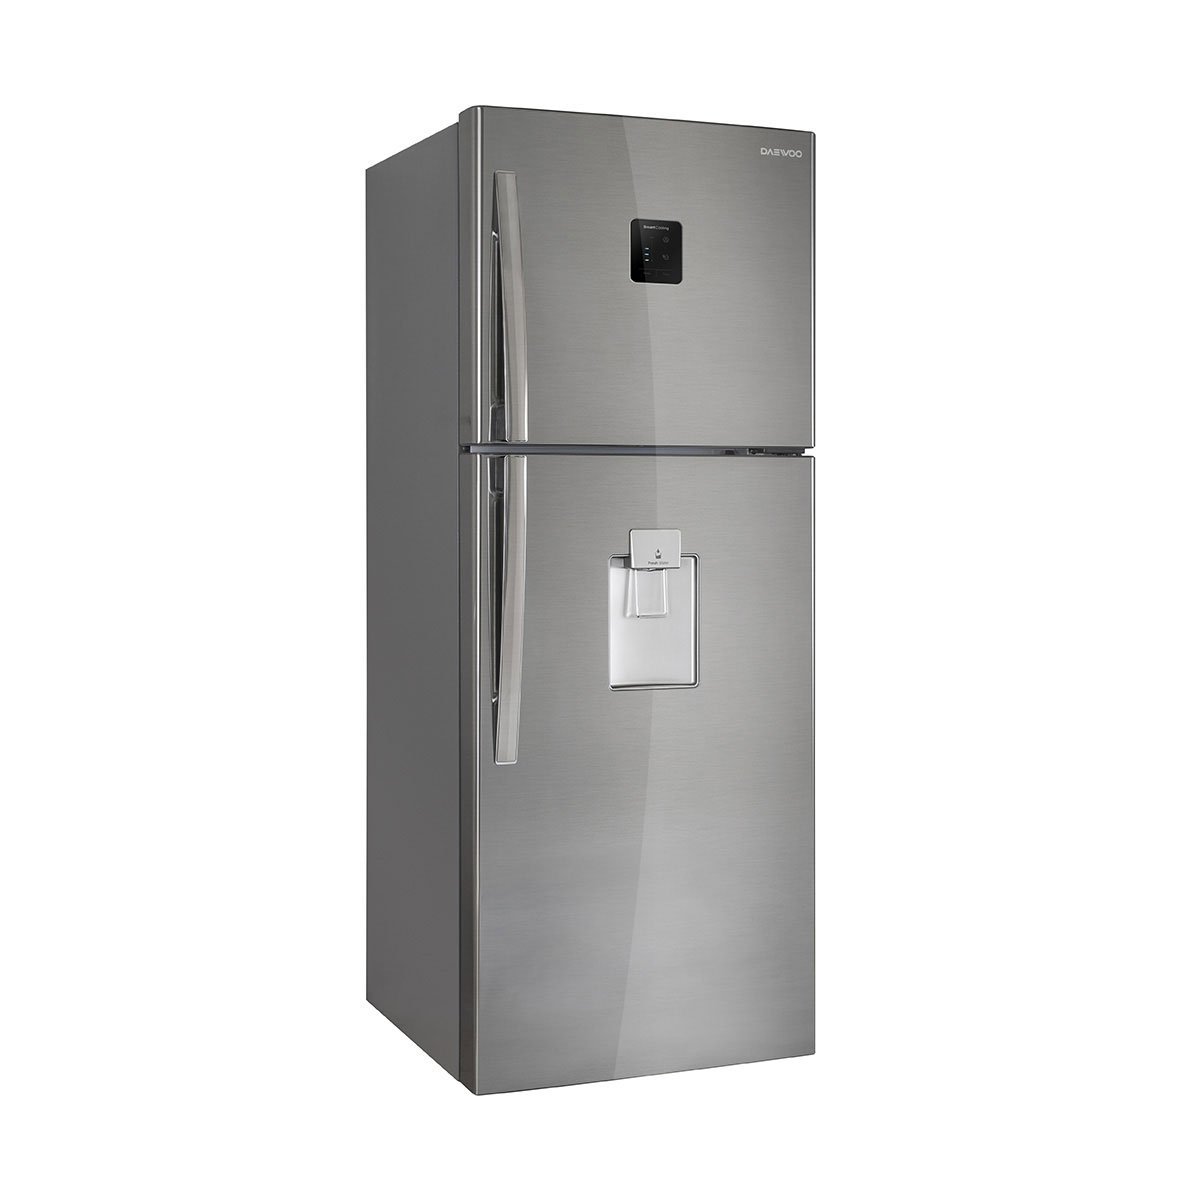 Refrigerador Daewoo Top Mount 16 Pies Glam Silver